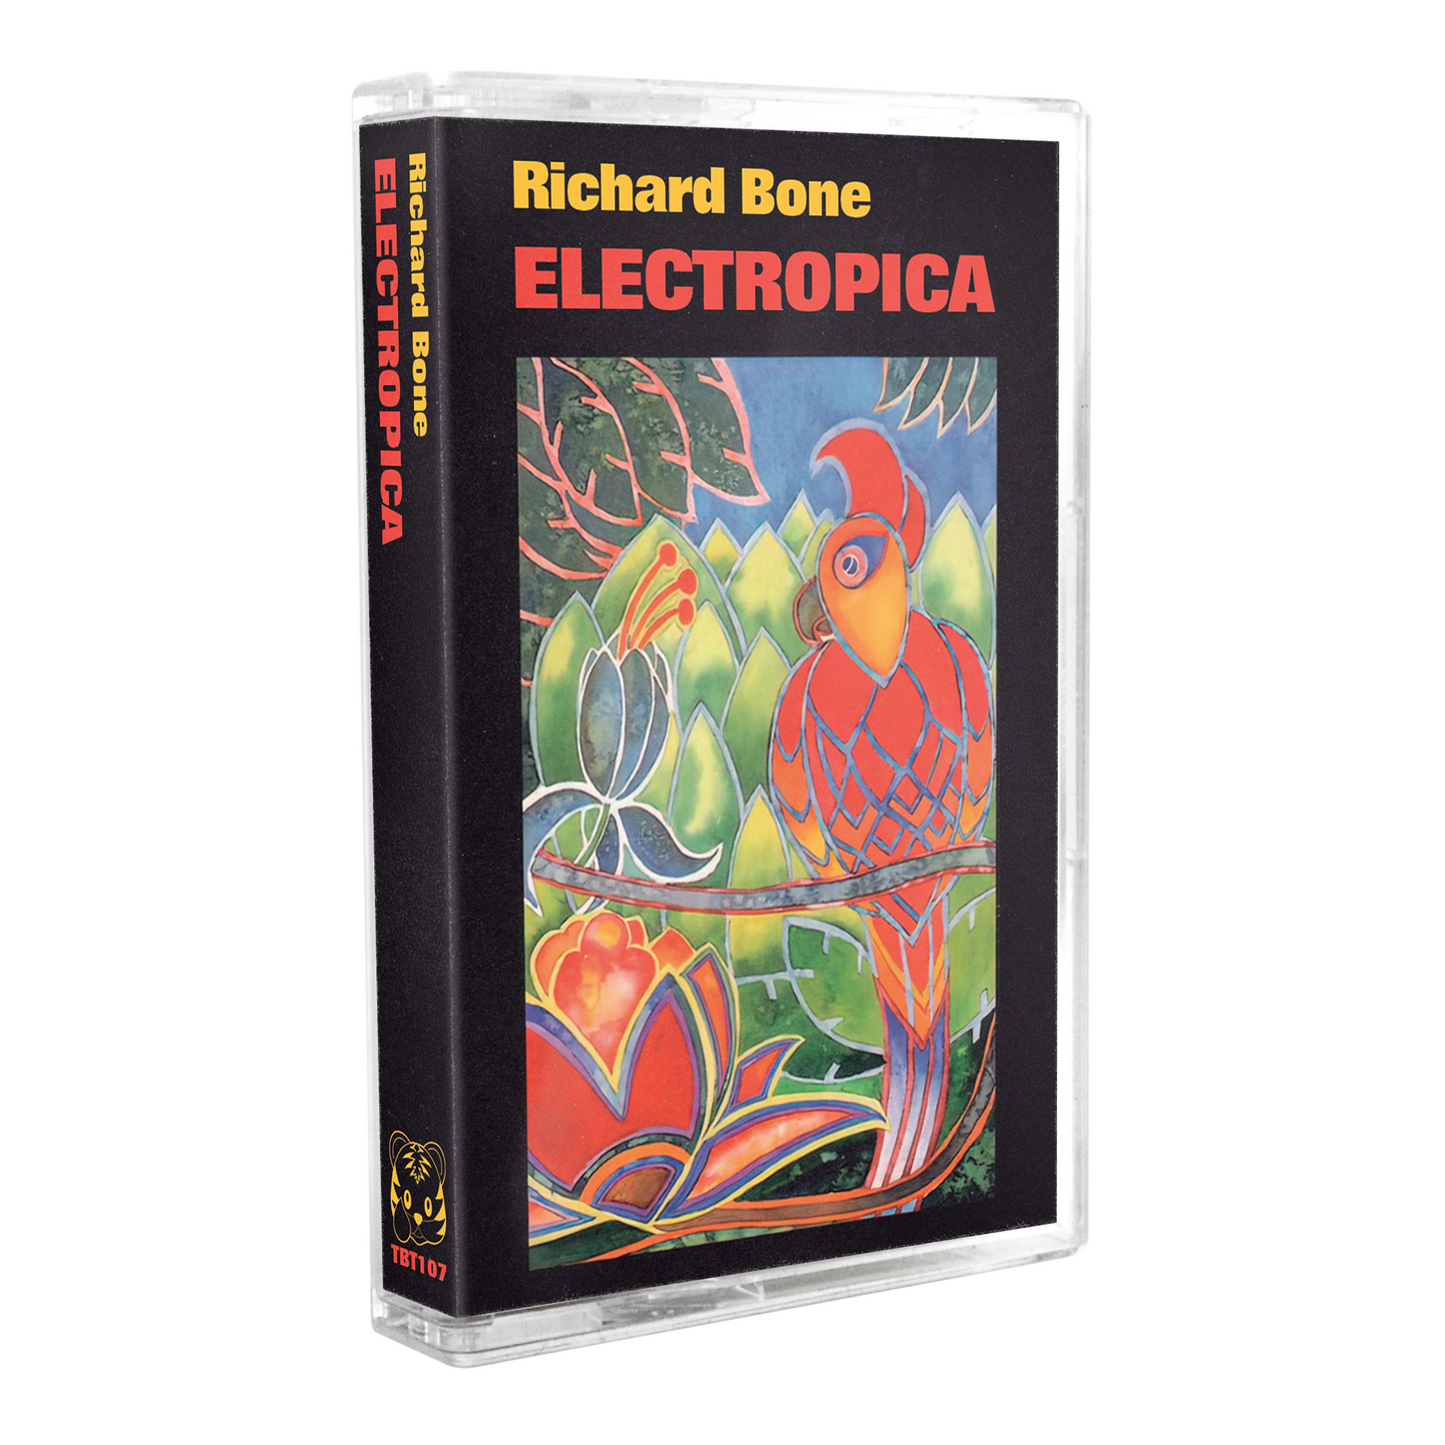 Richard Bone - "Electropica" Limited Edition Cassette Tape